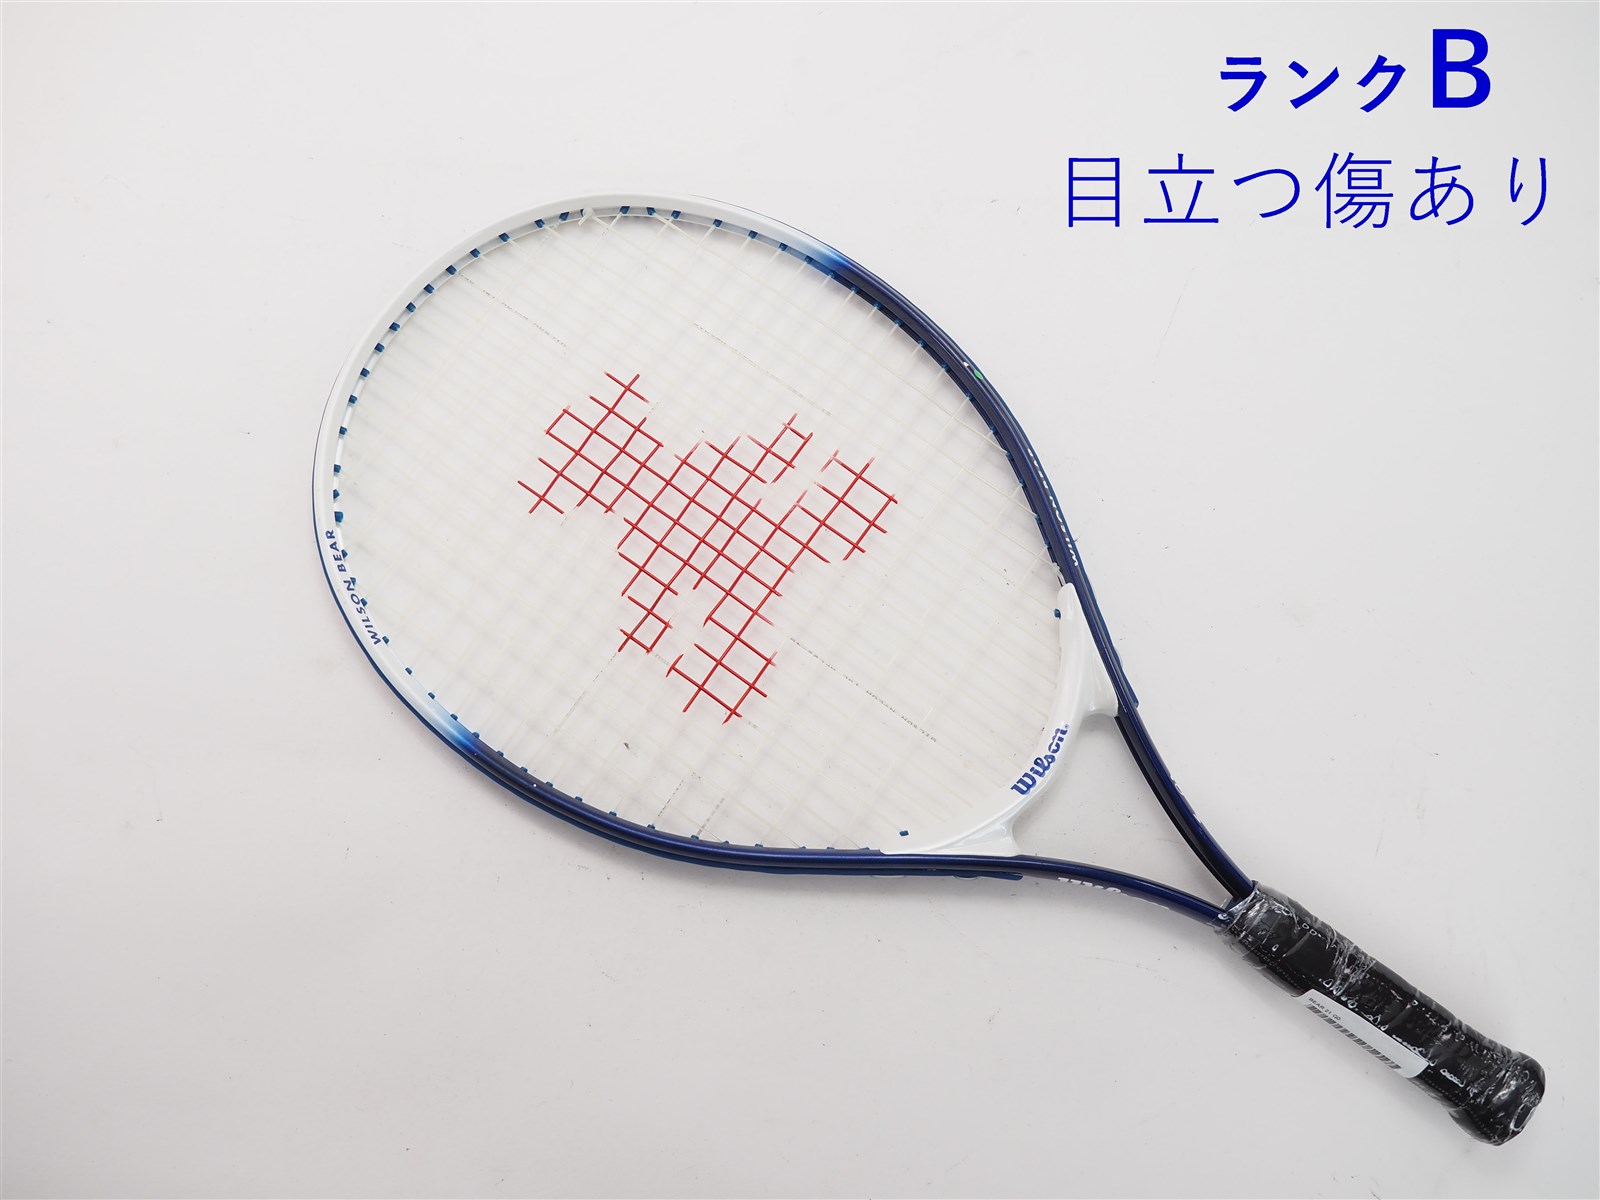 EZONE BEAST RADICAL ジュニア硬式テニスラケット子供用まとめて